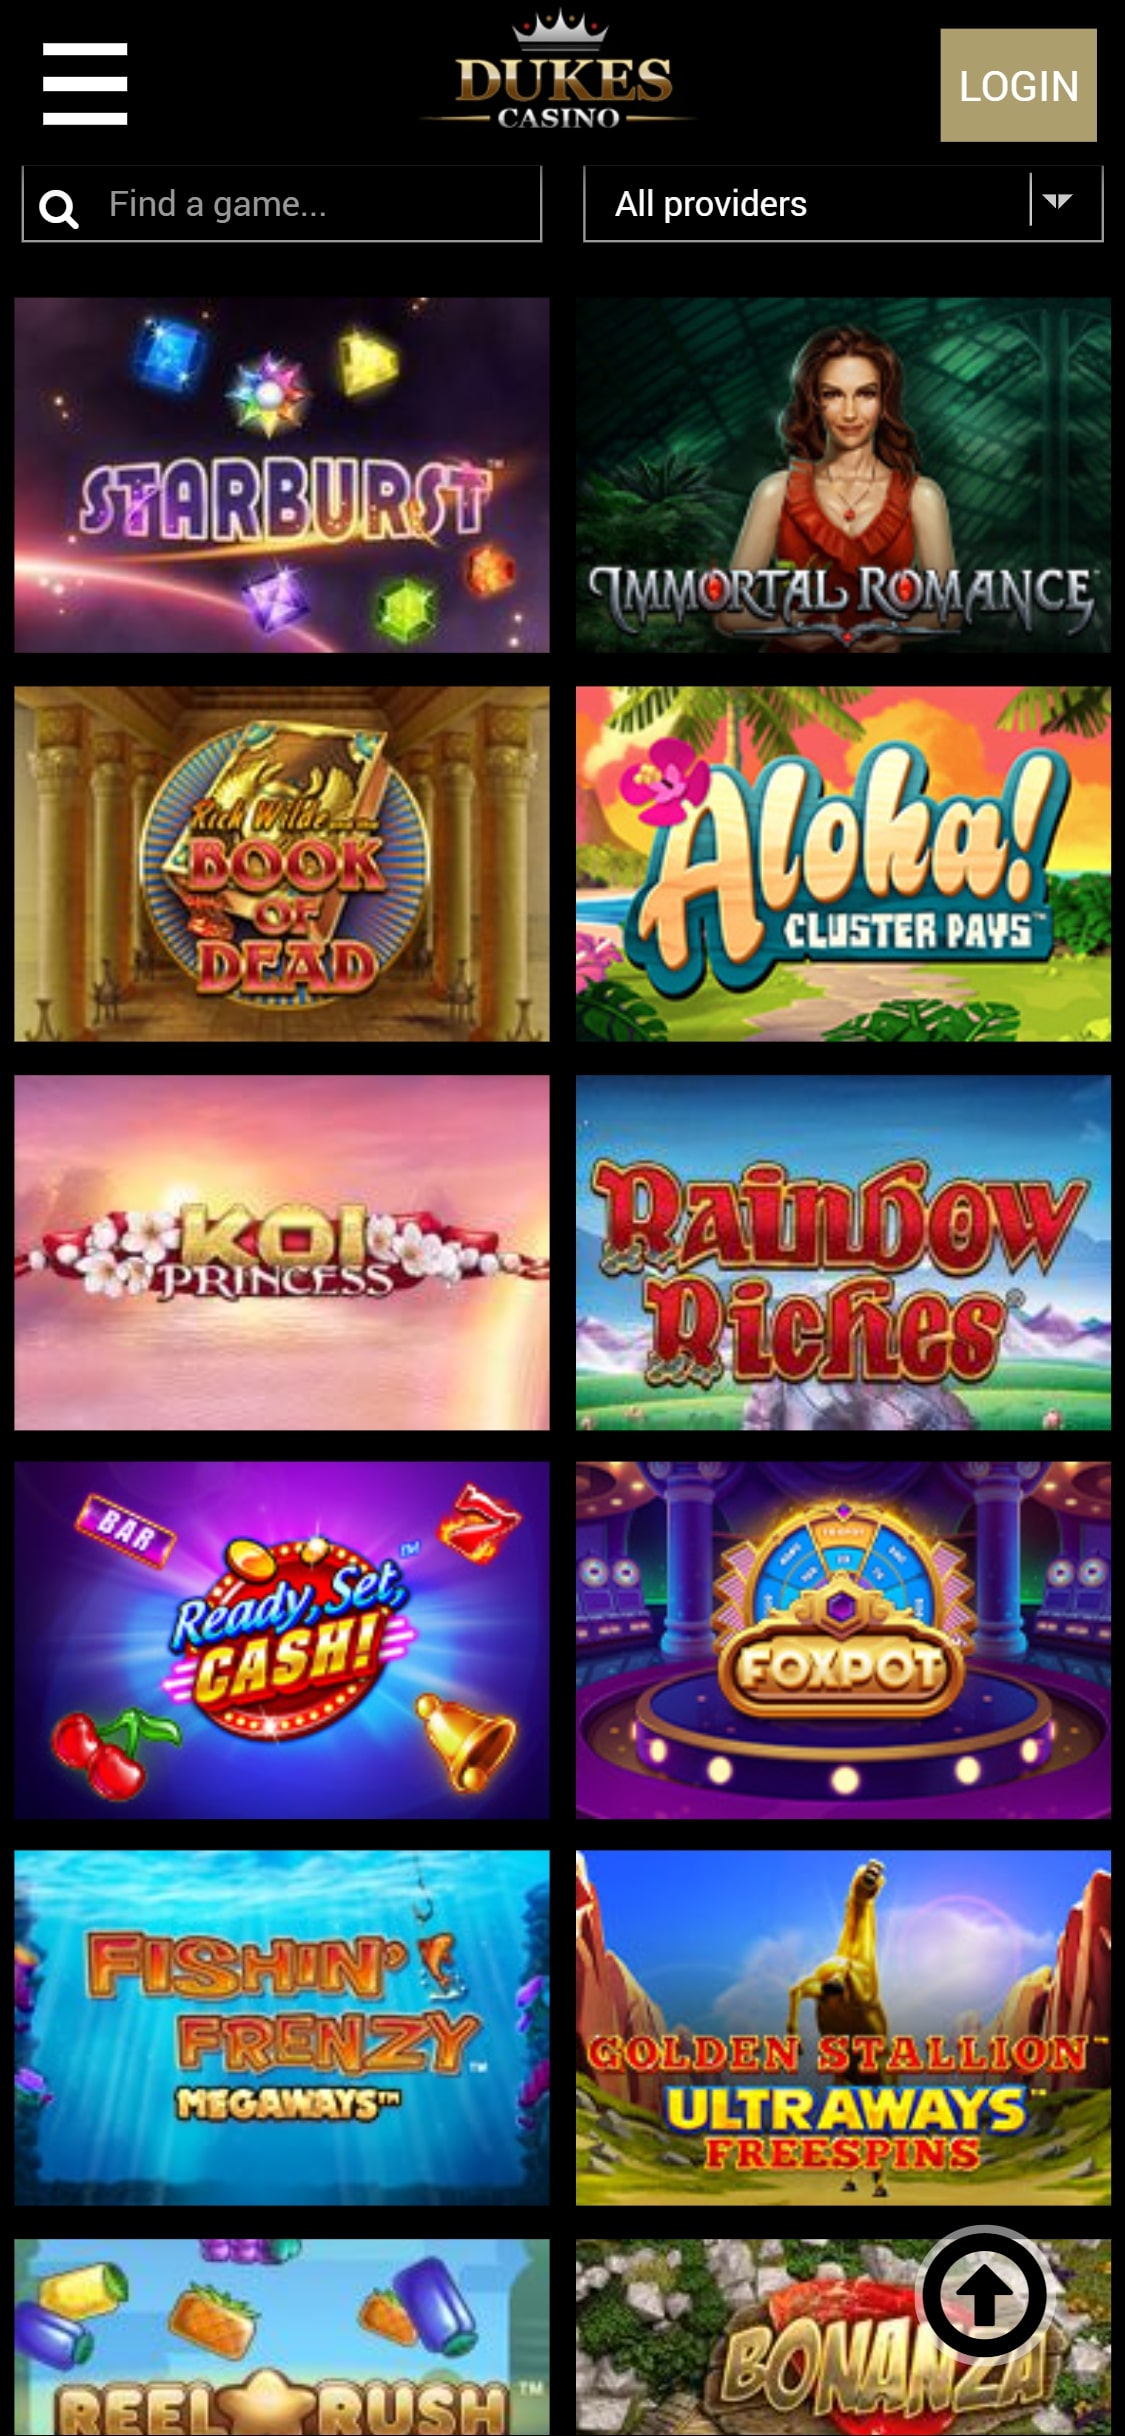 Dukes Casino Mobile Games Review